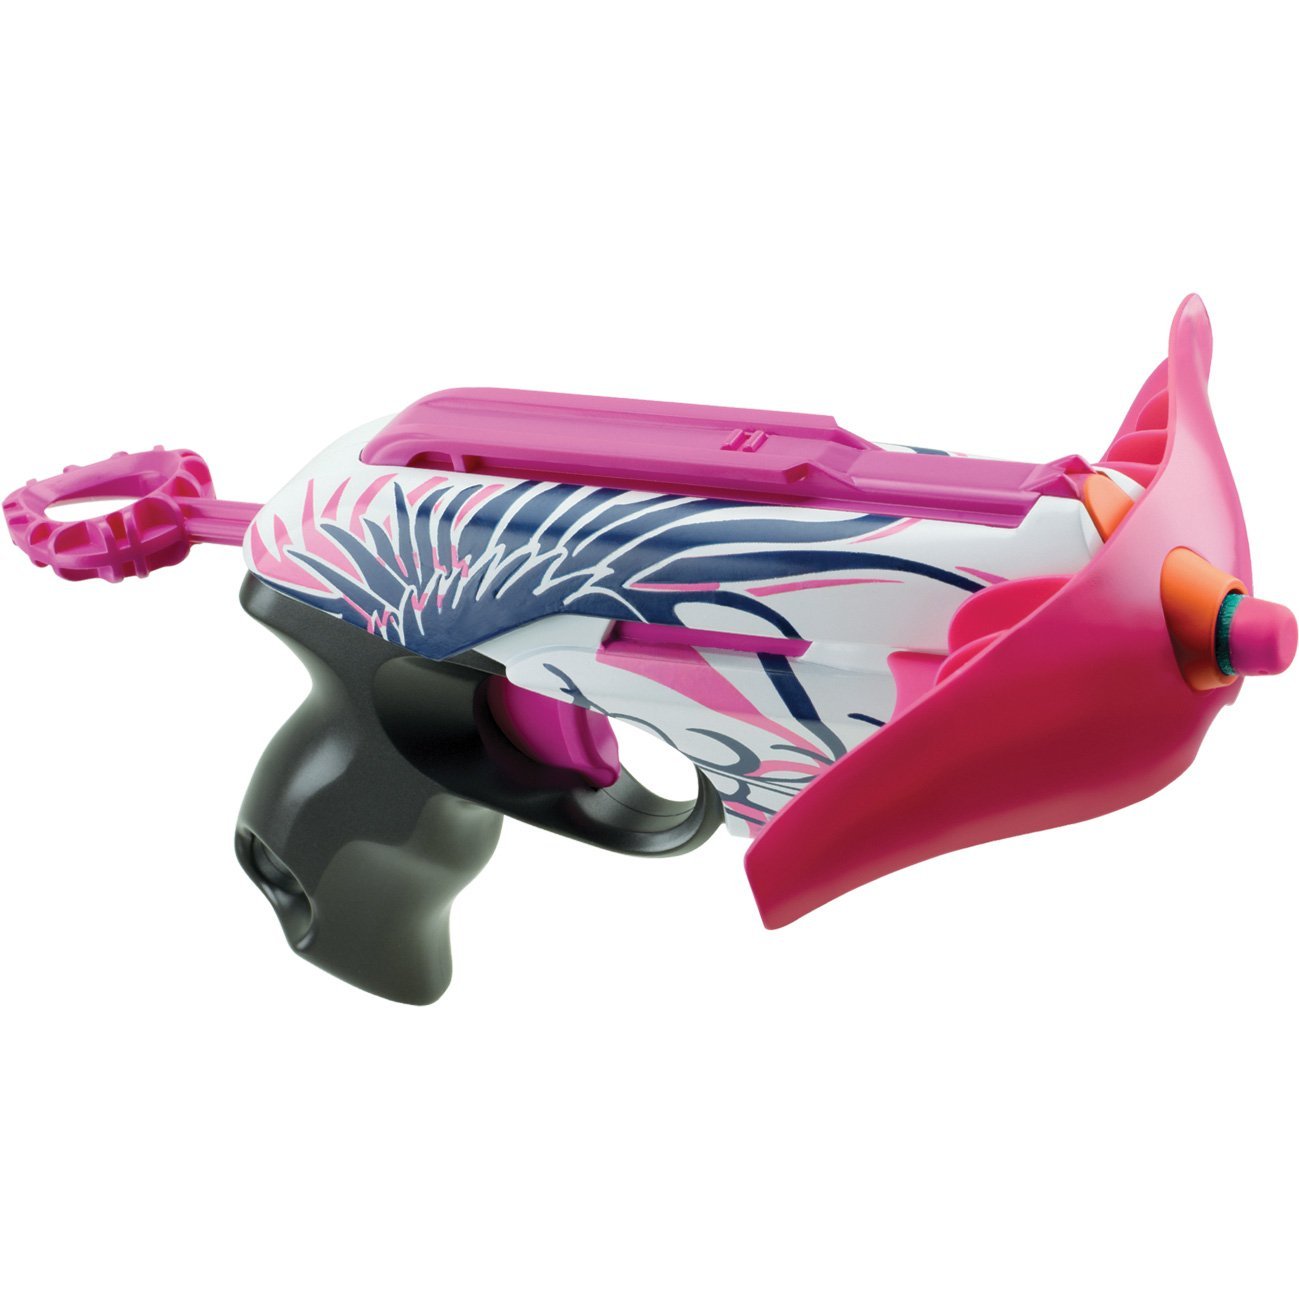 NERF Rebelle Pink Blaster